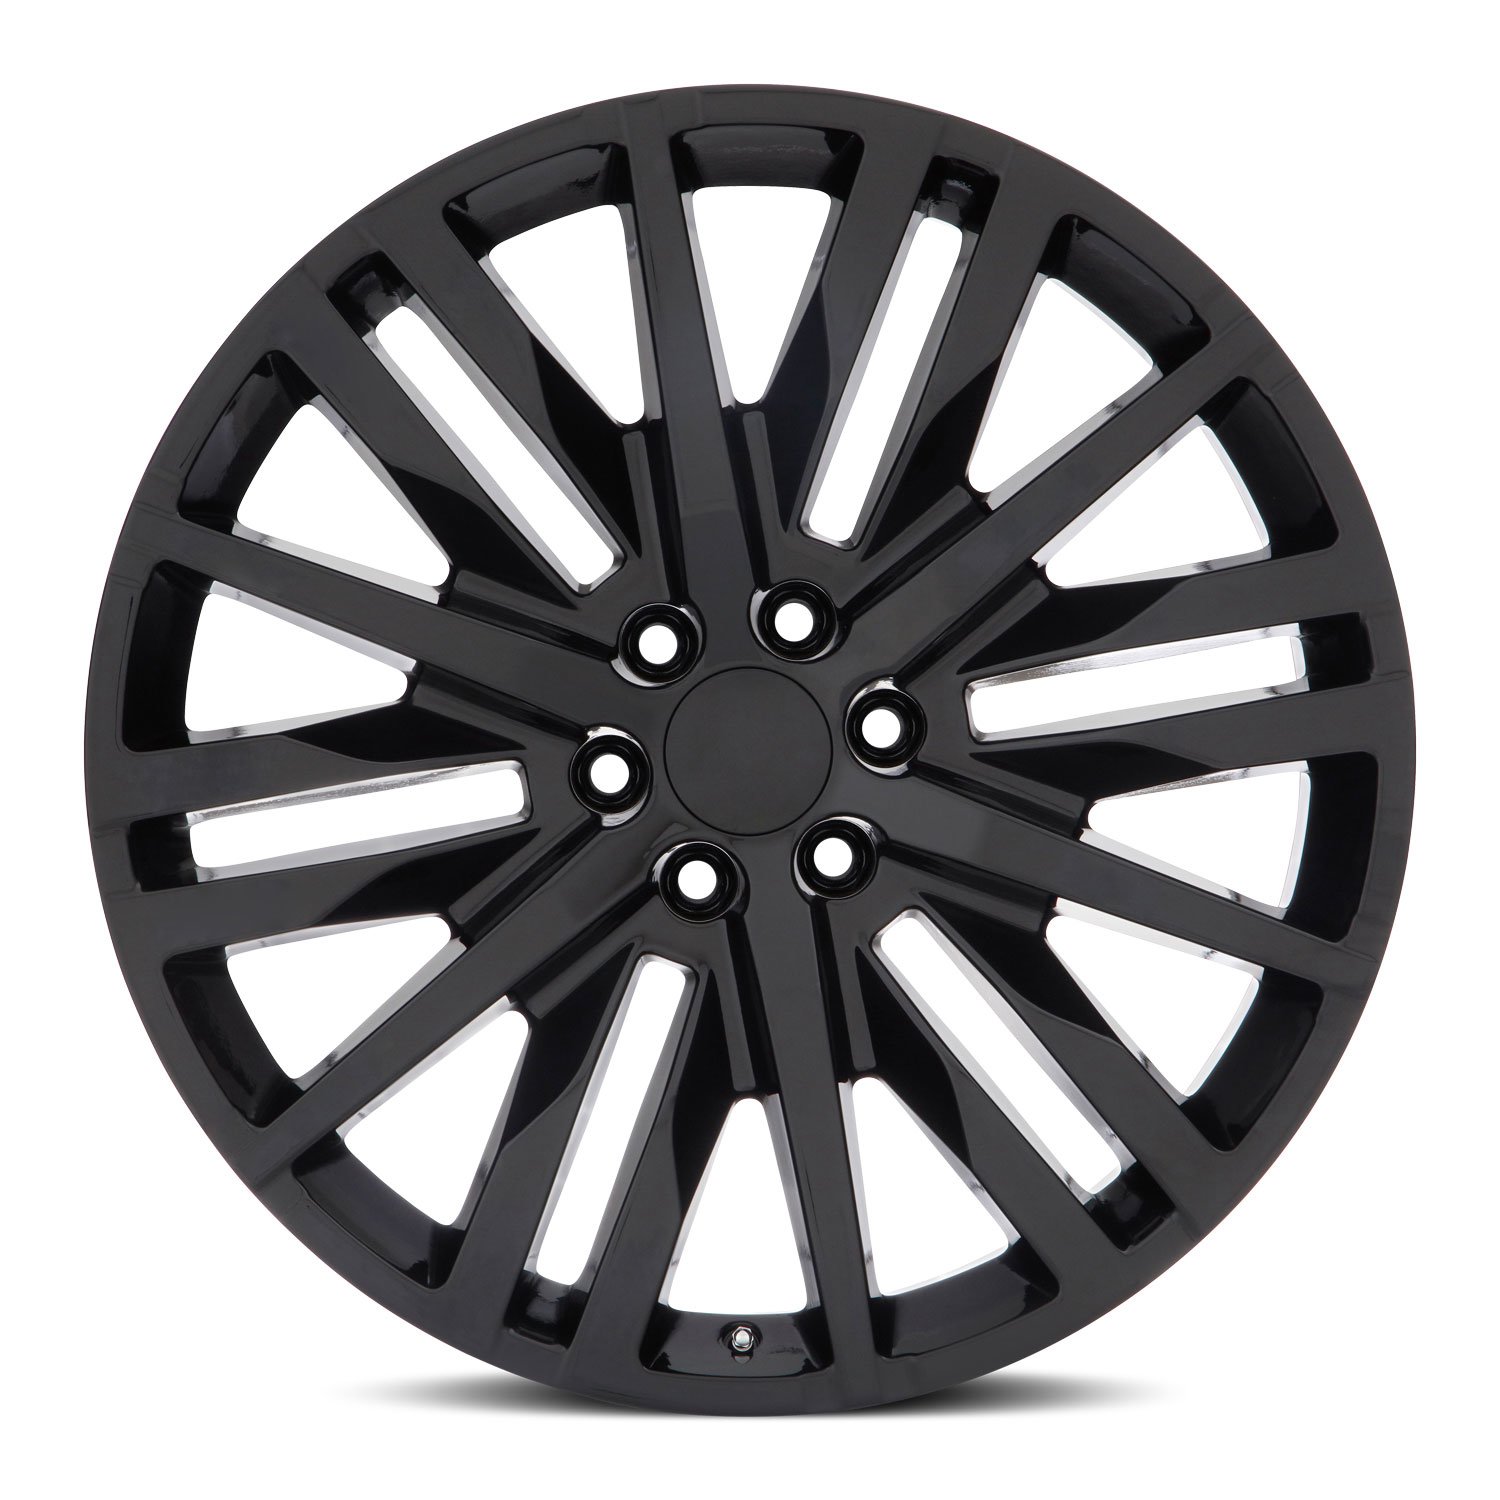 FR97-2410-Gloss-Black-02-GMC-Split-6-spoke-factory-reproductions-wheels-rims-face-1500